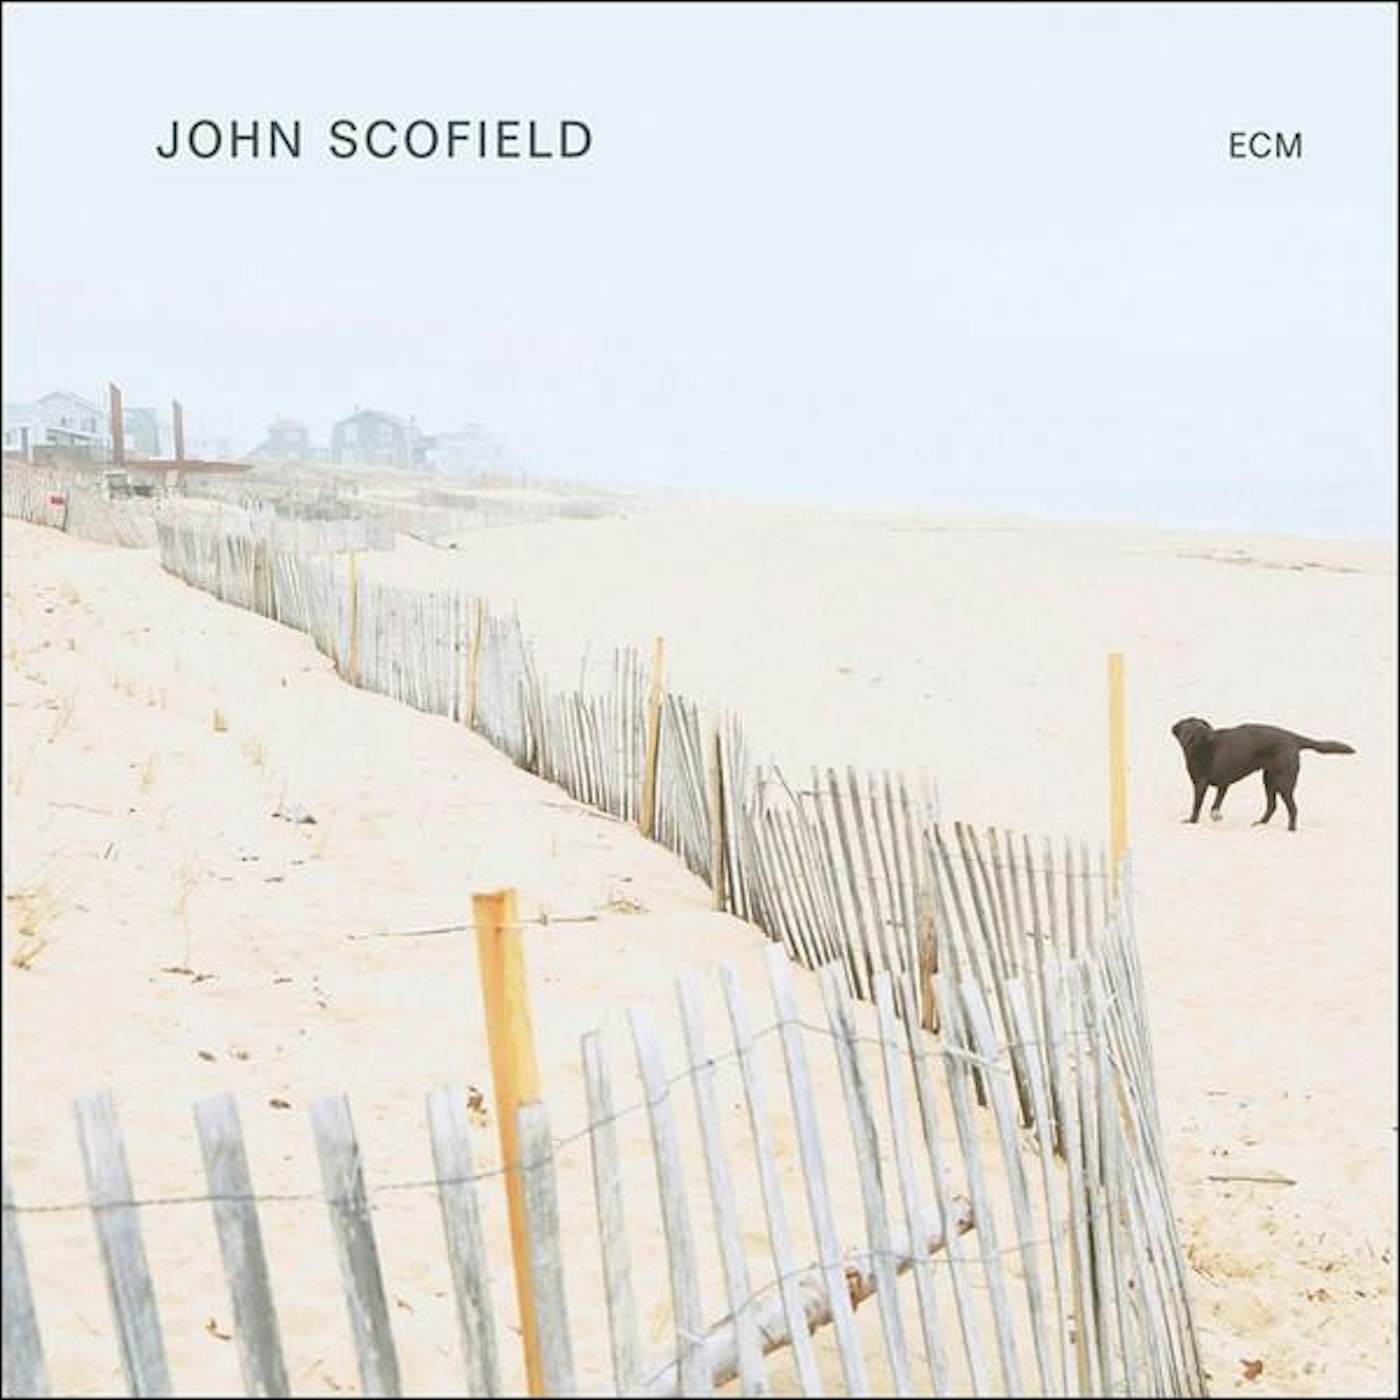 John Scofield Vinyl Record